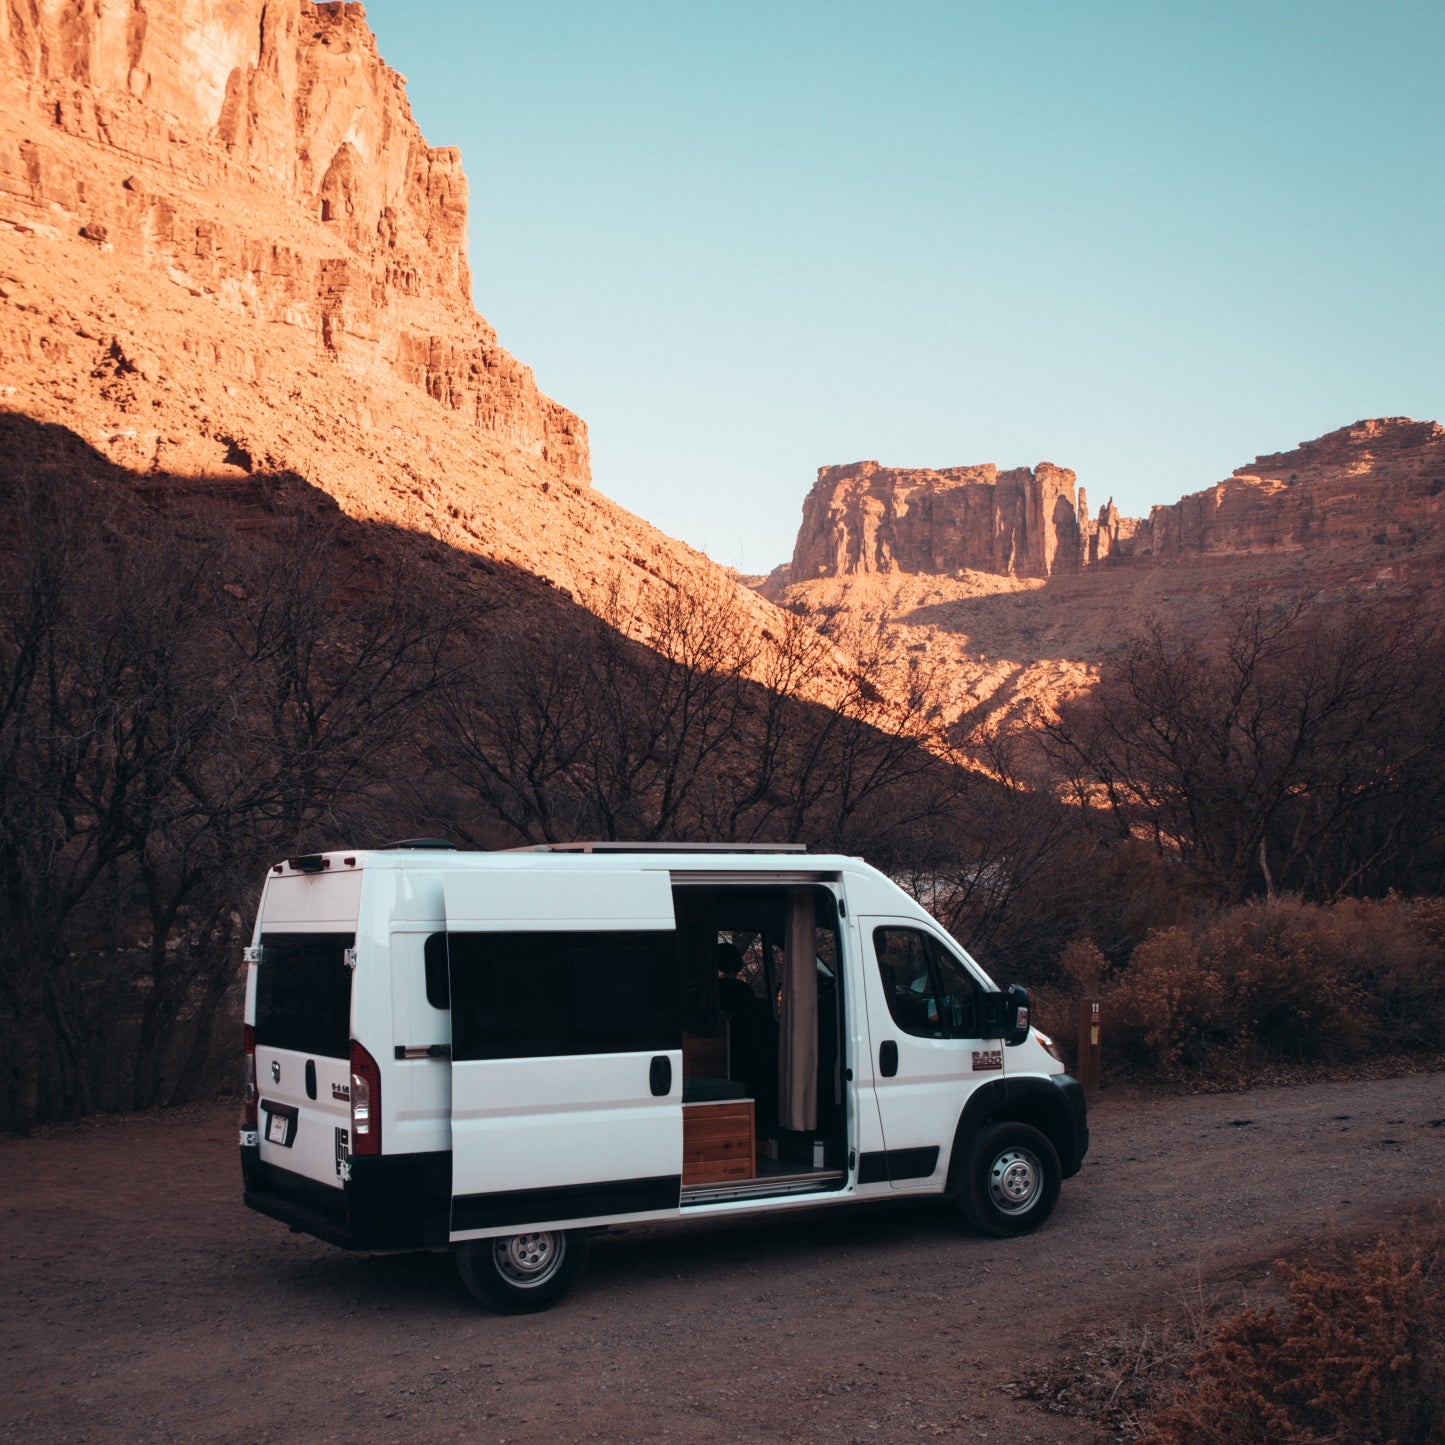 Boho camper van in the desert